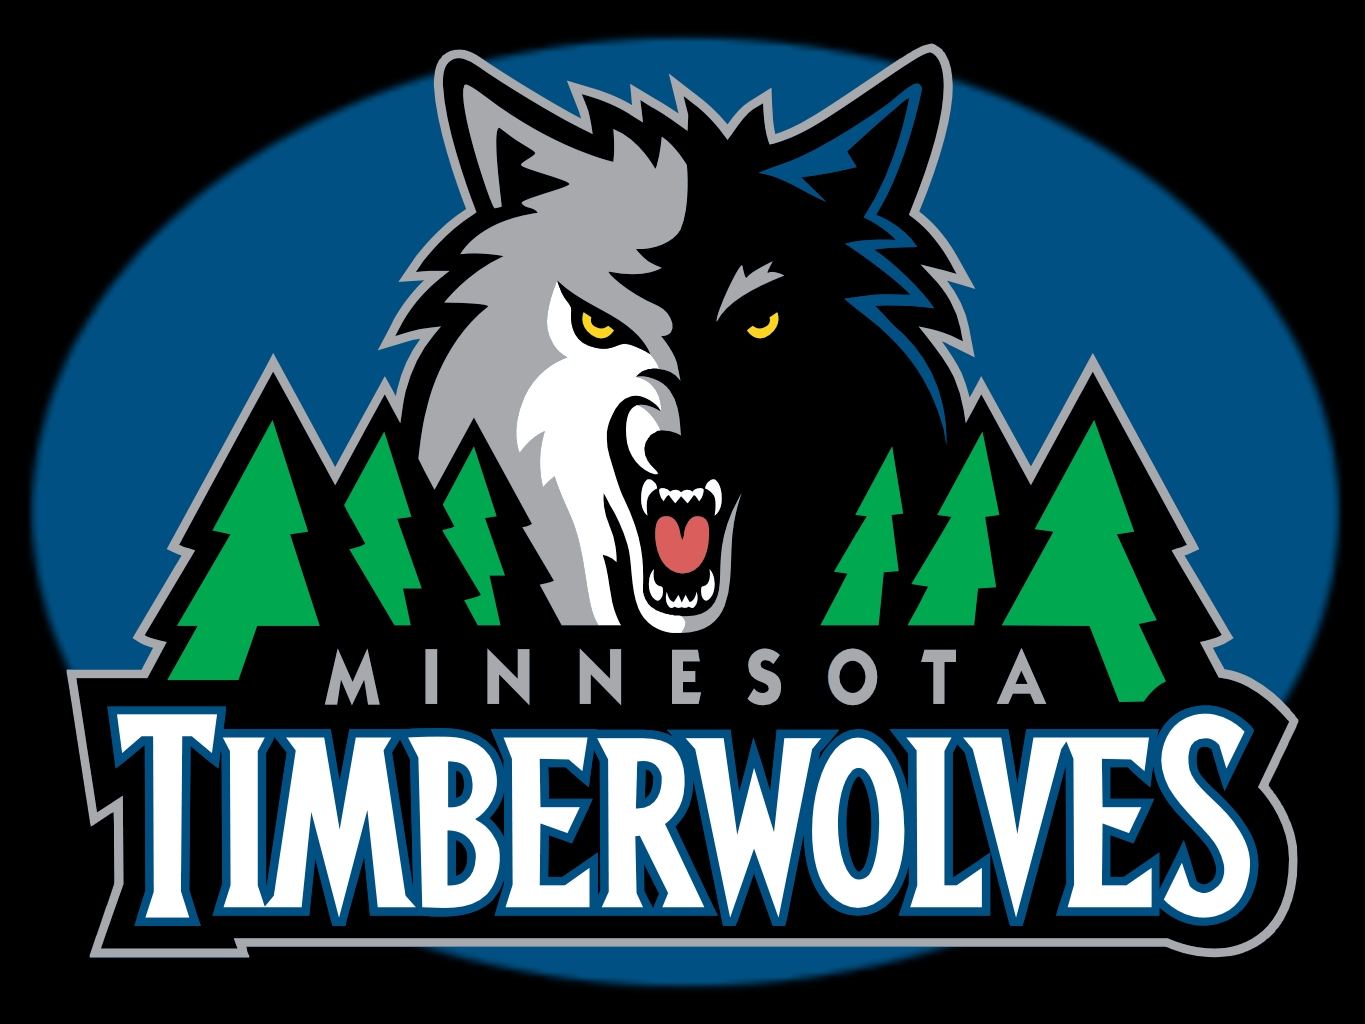 Minnesota Timberwolves Tickets